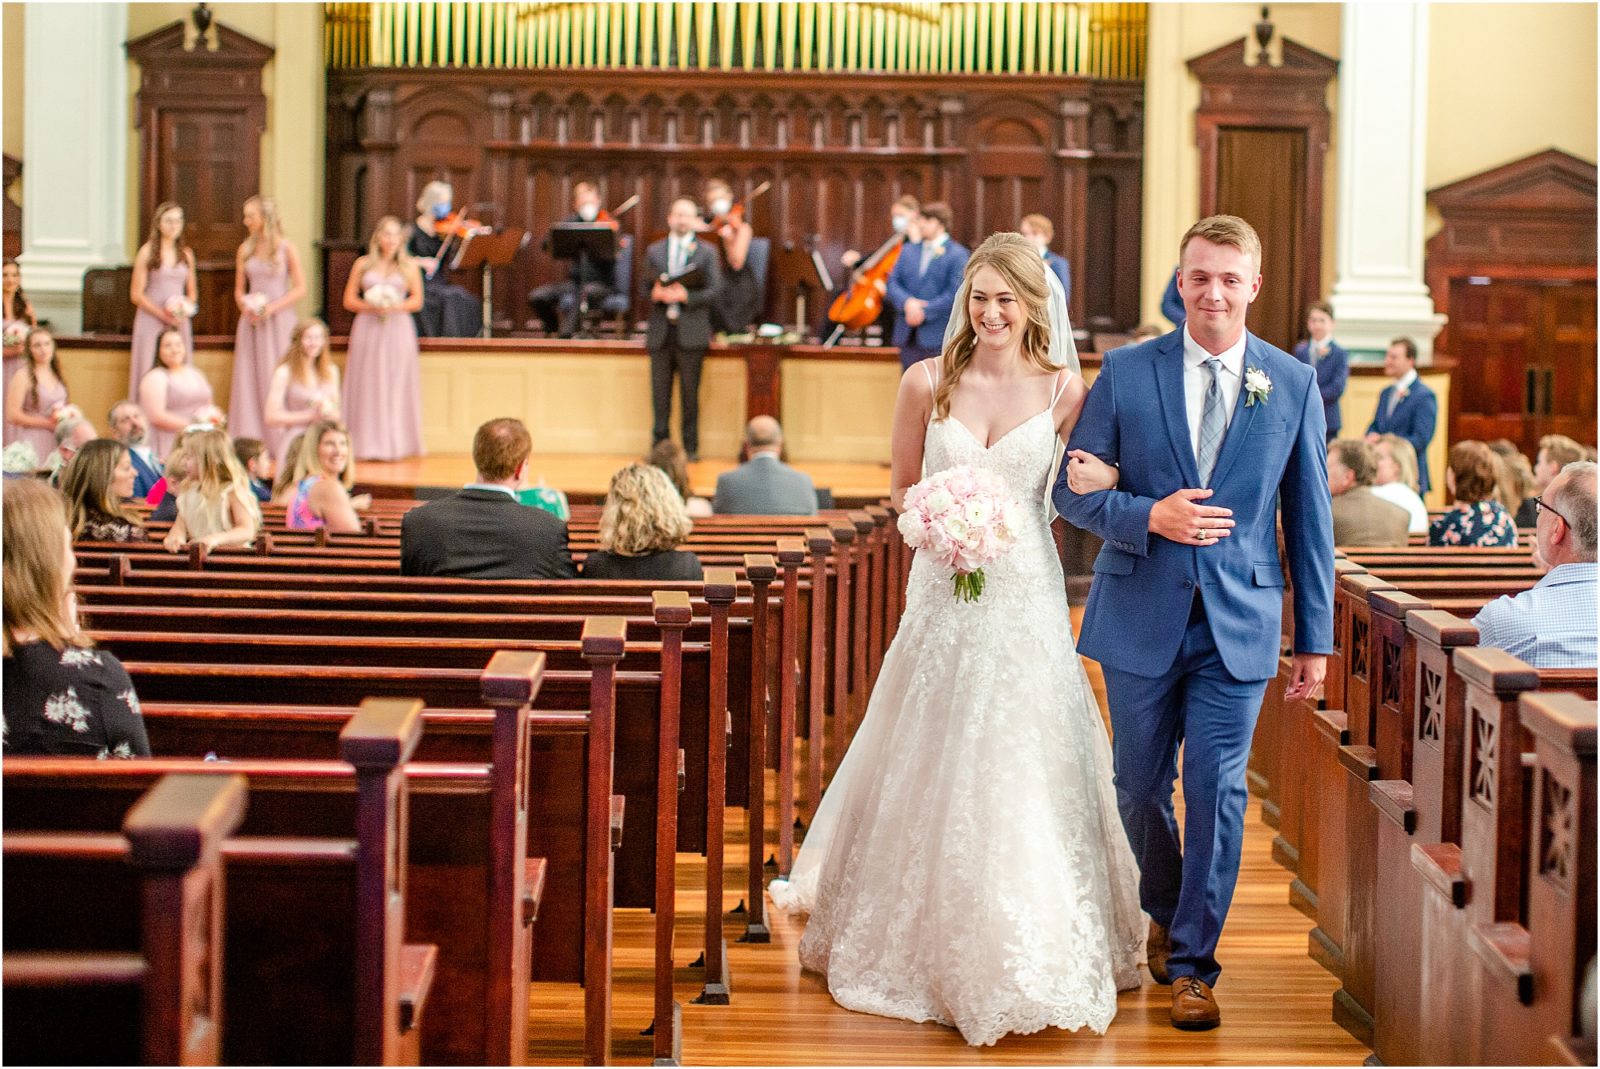 Groom and bride walking down church aisle